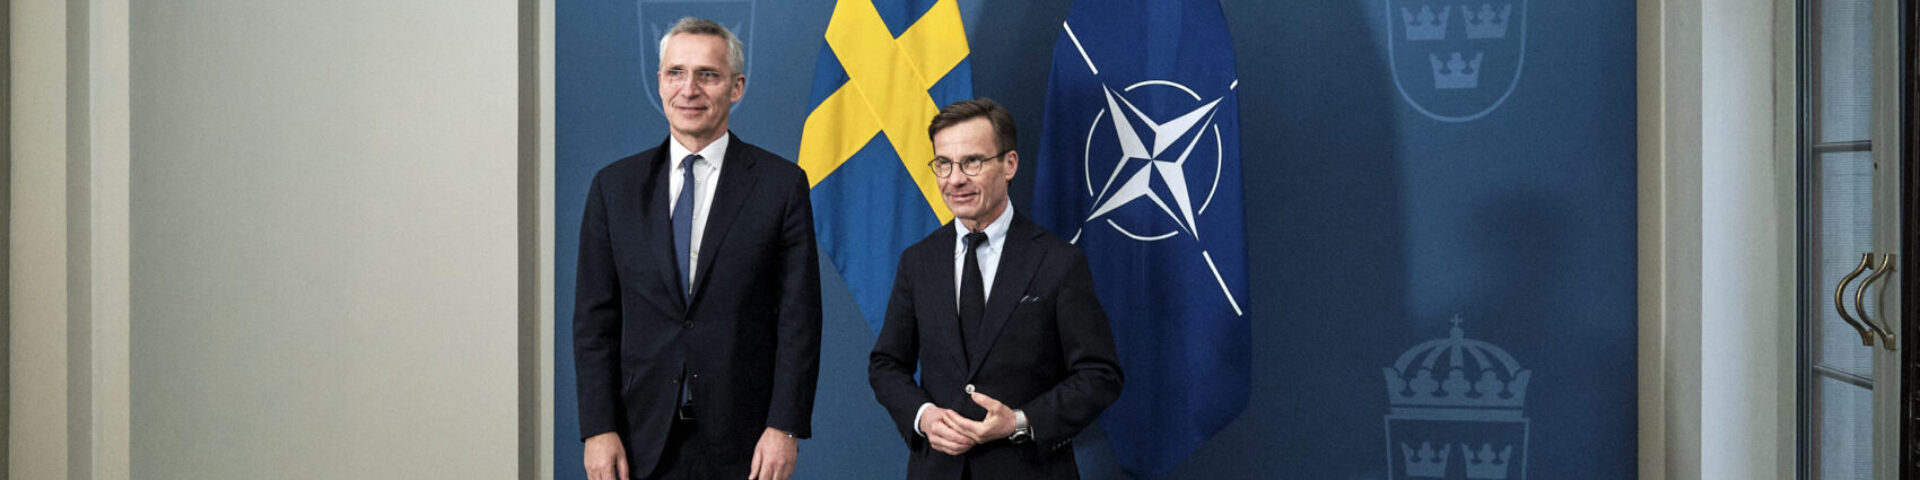 NATO Bid Puts Pressure on Sweden’s Domestic Politics